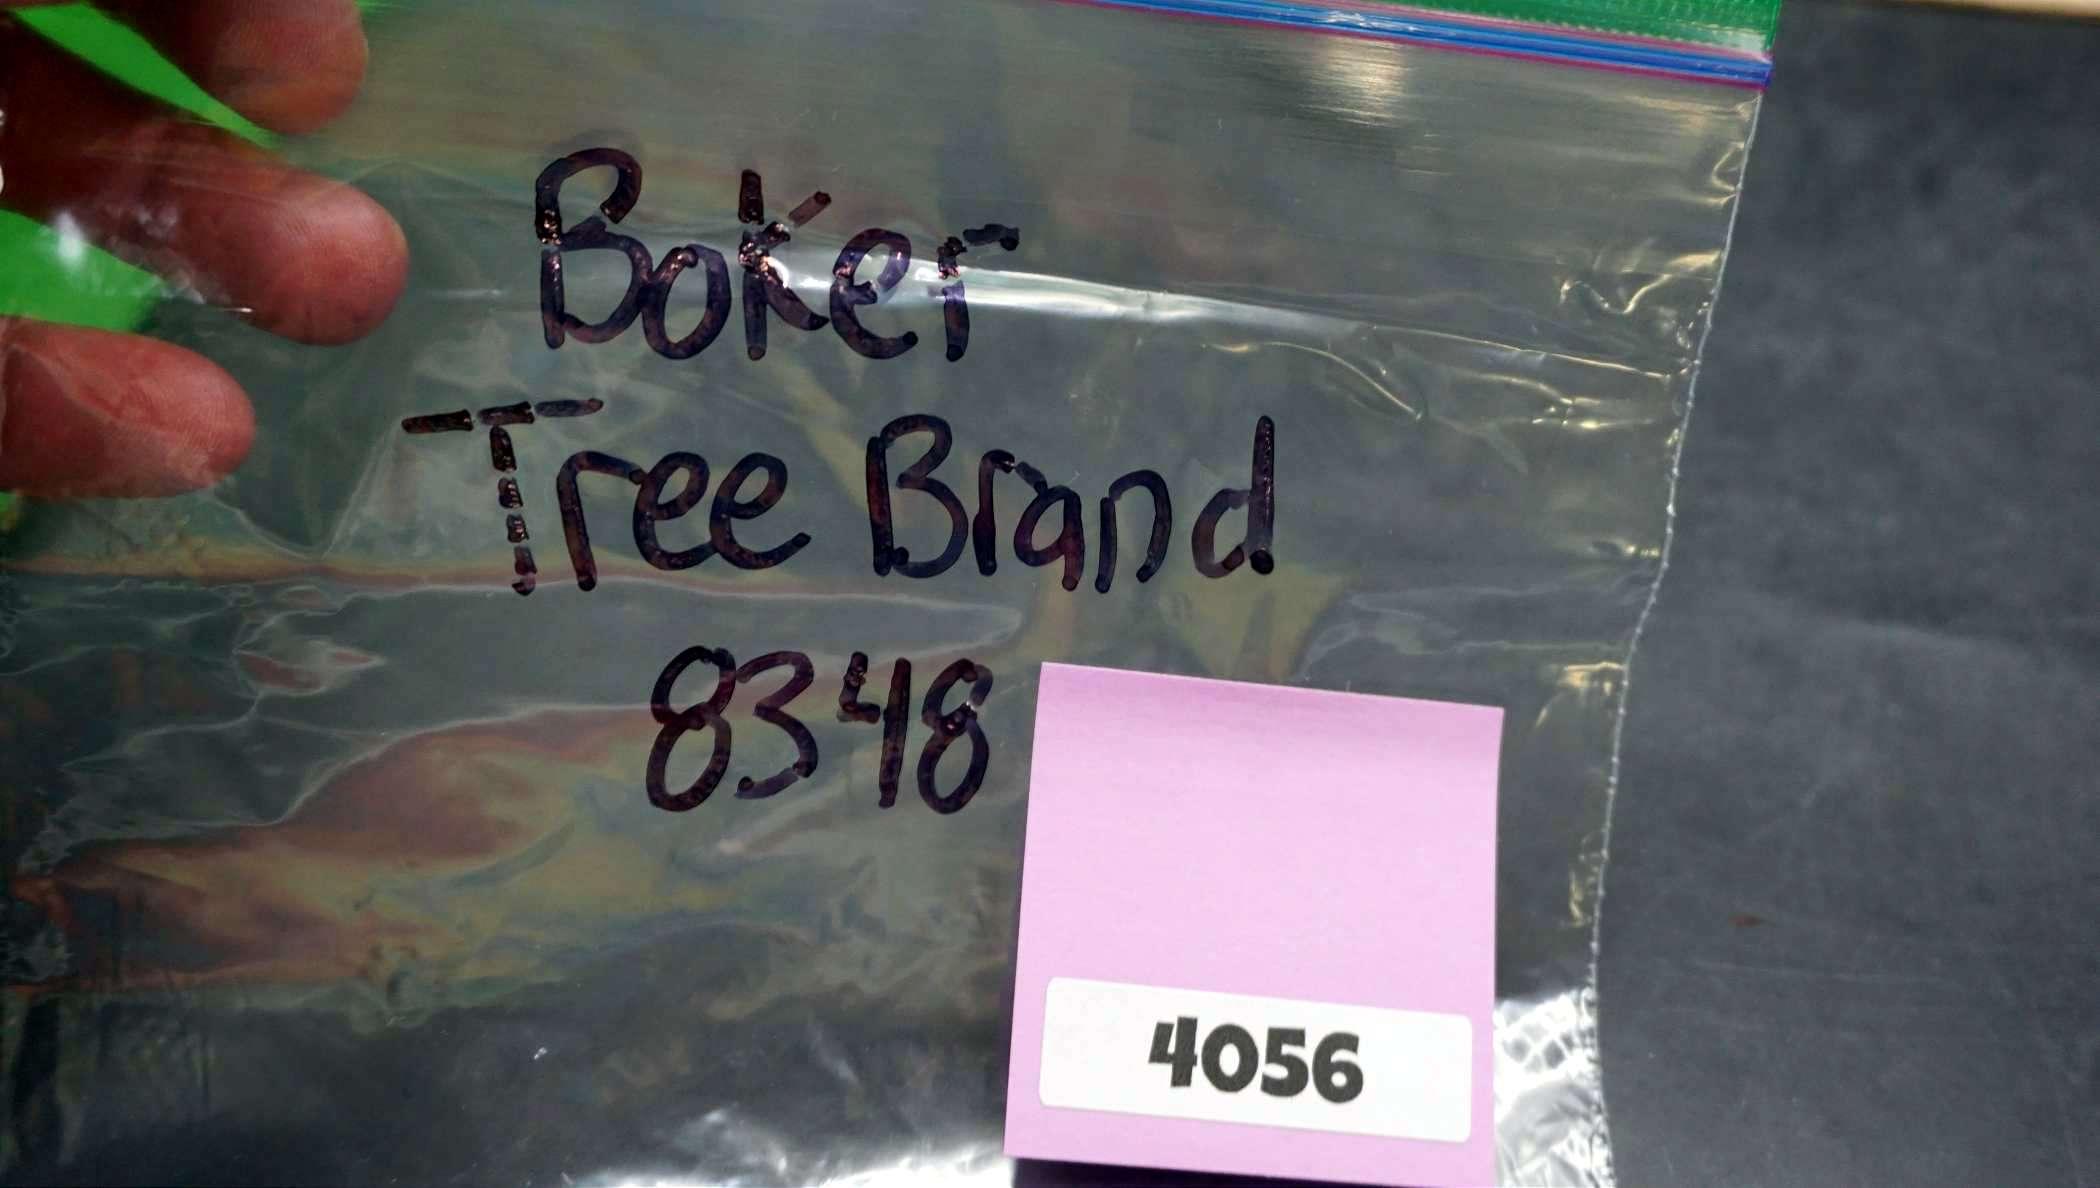 Boker Tree Brand 8348 Folding Knife